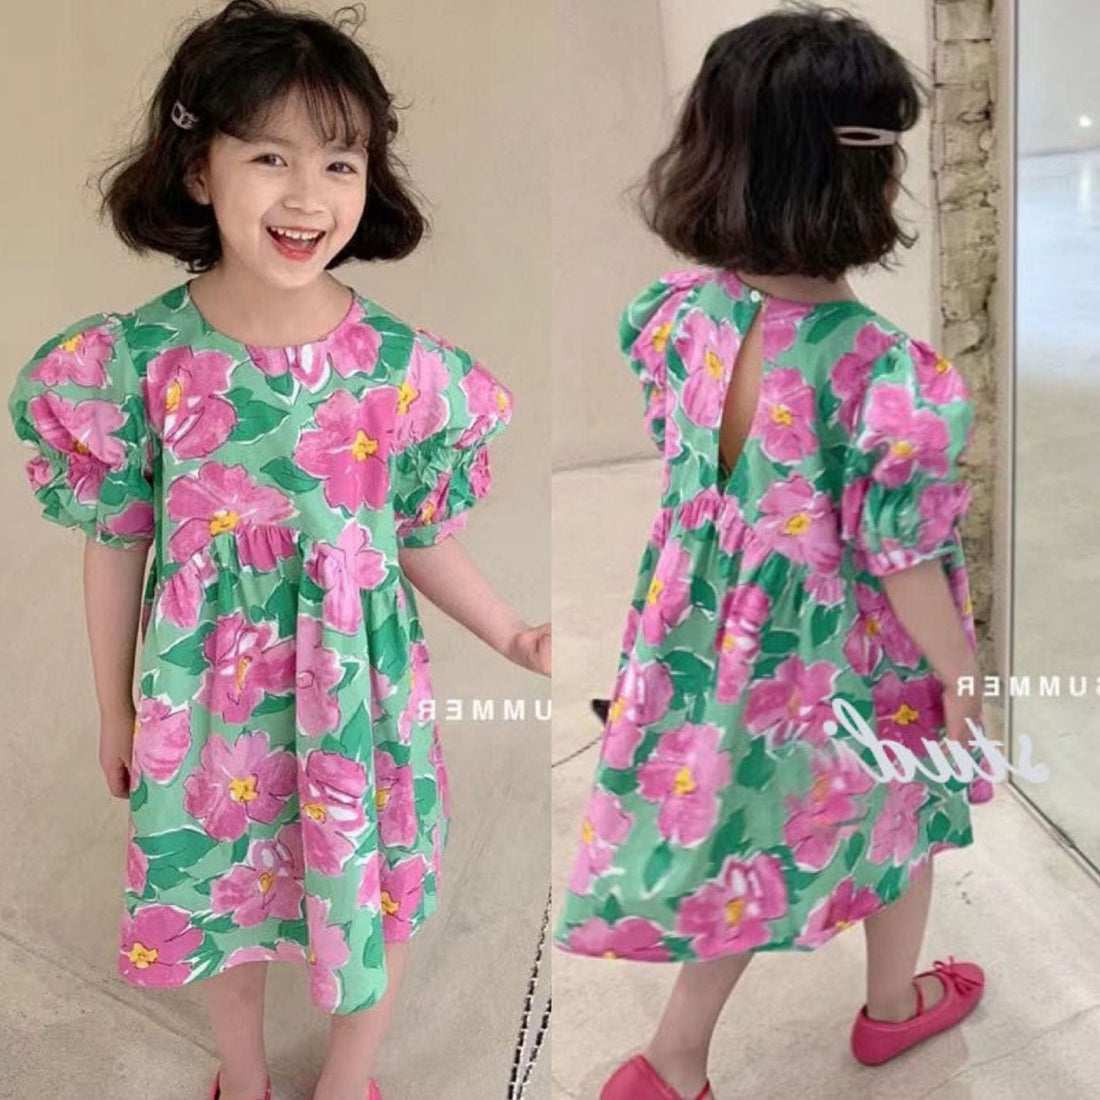 [507601] - Dress Fashion Anak Perempuan Import - Motif Nature Flora